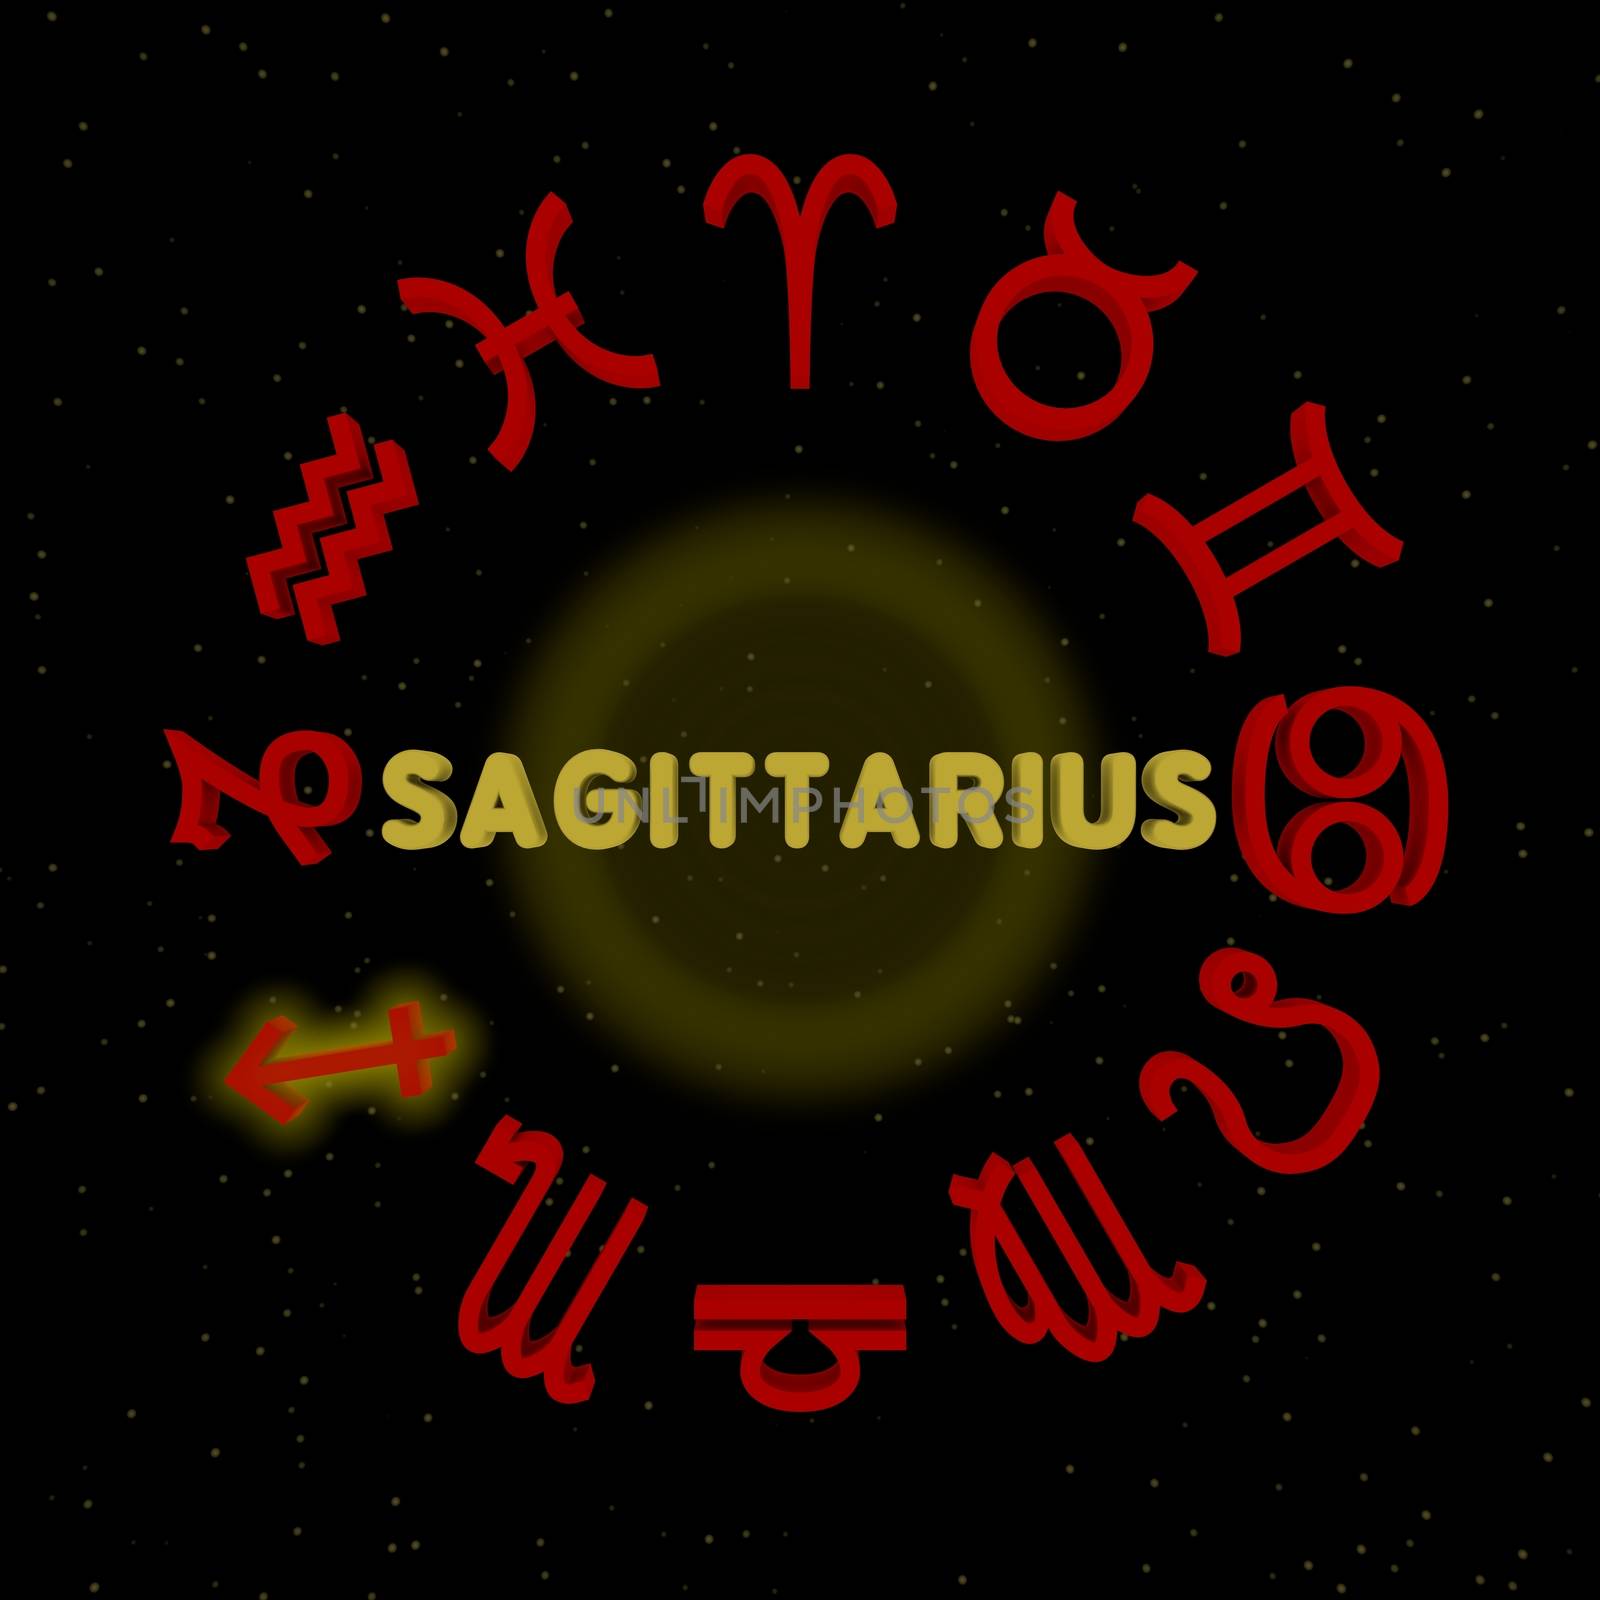 3d zodiac signs with SAGITTARIUS highlighted